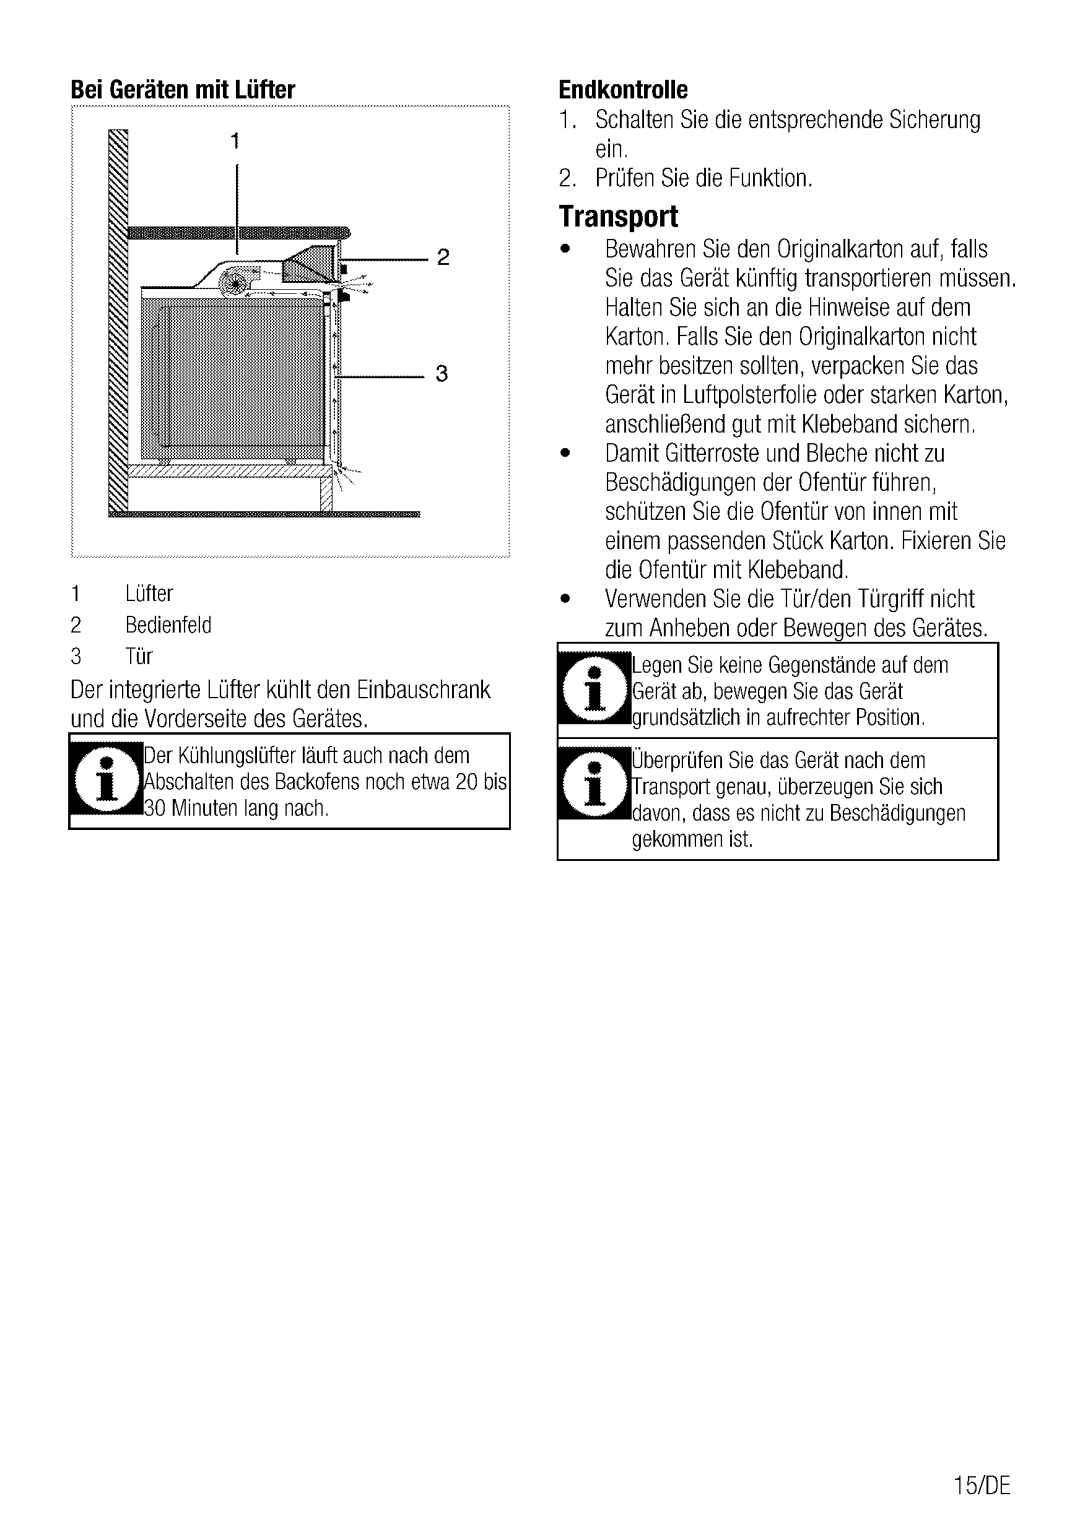 Blomberg BEO 7422 manual 